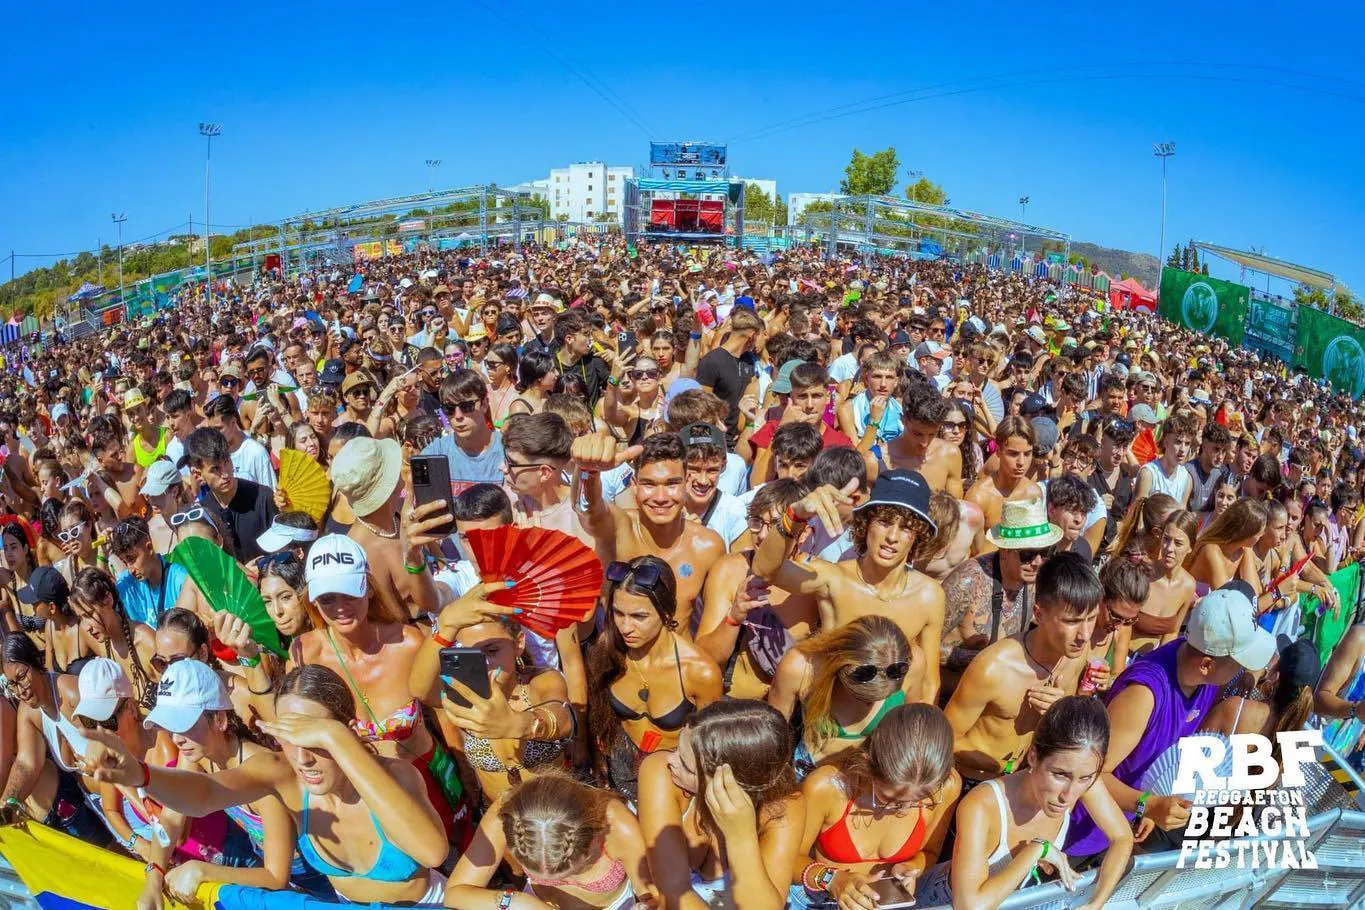 Image of the Reggaeton Beach Festival held in Mallorca. 